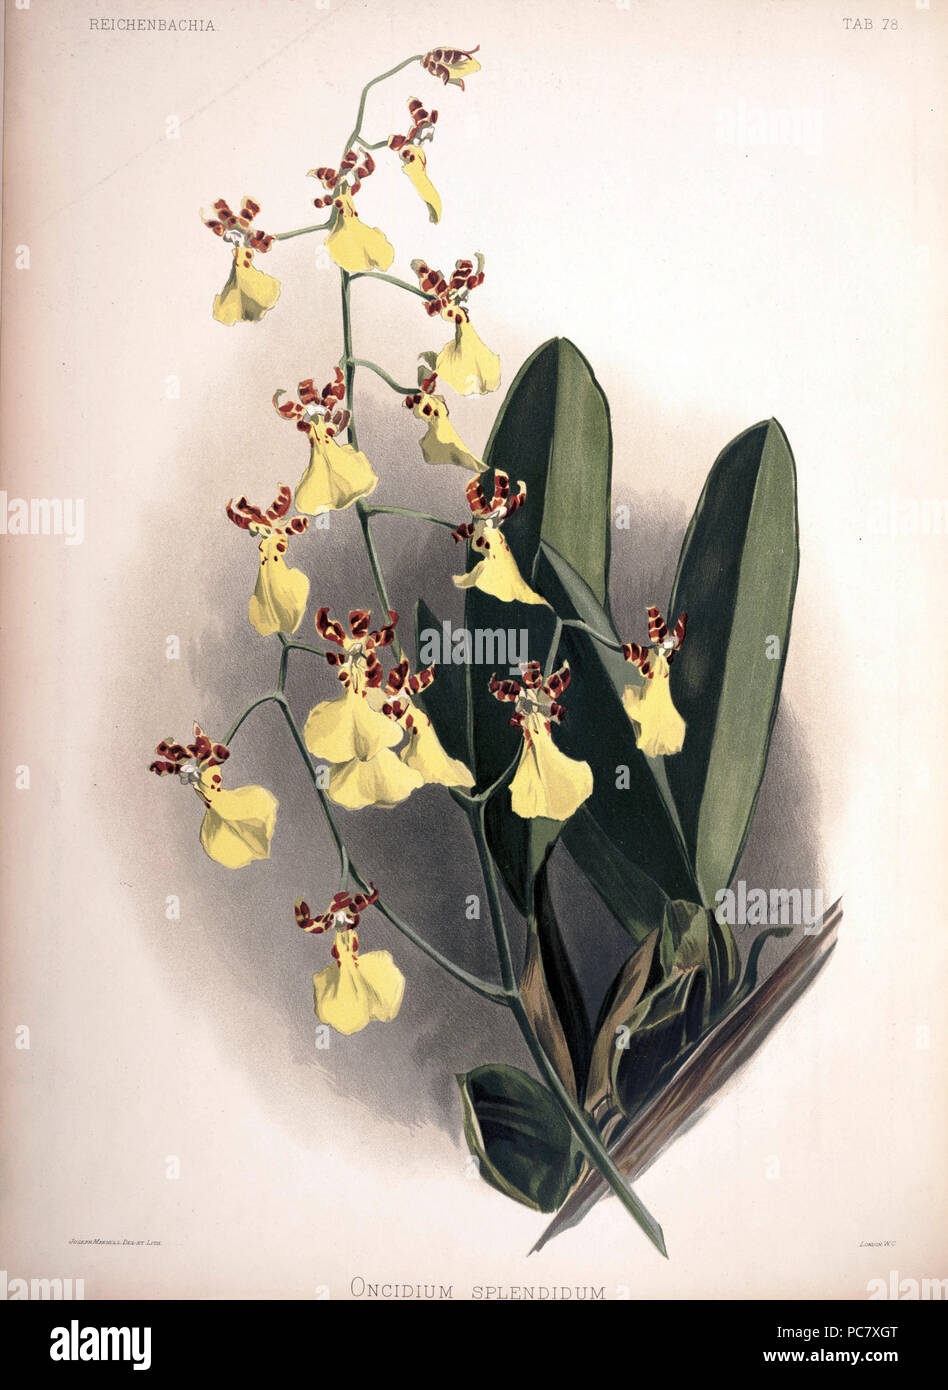 220 Frederick Sander - Reichenbachia II plate 78 (1890) - Oncidium splendidum Stock Photo